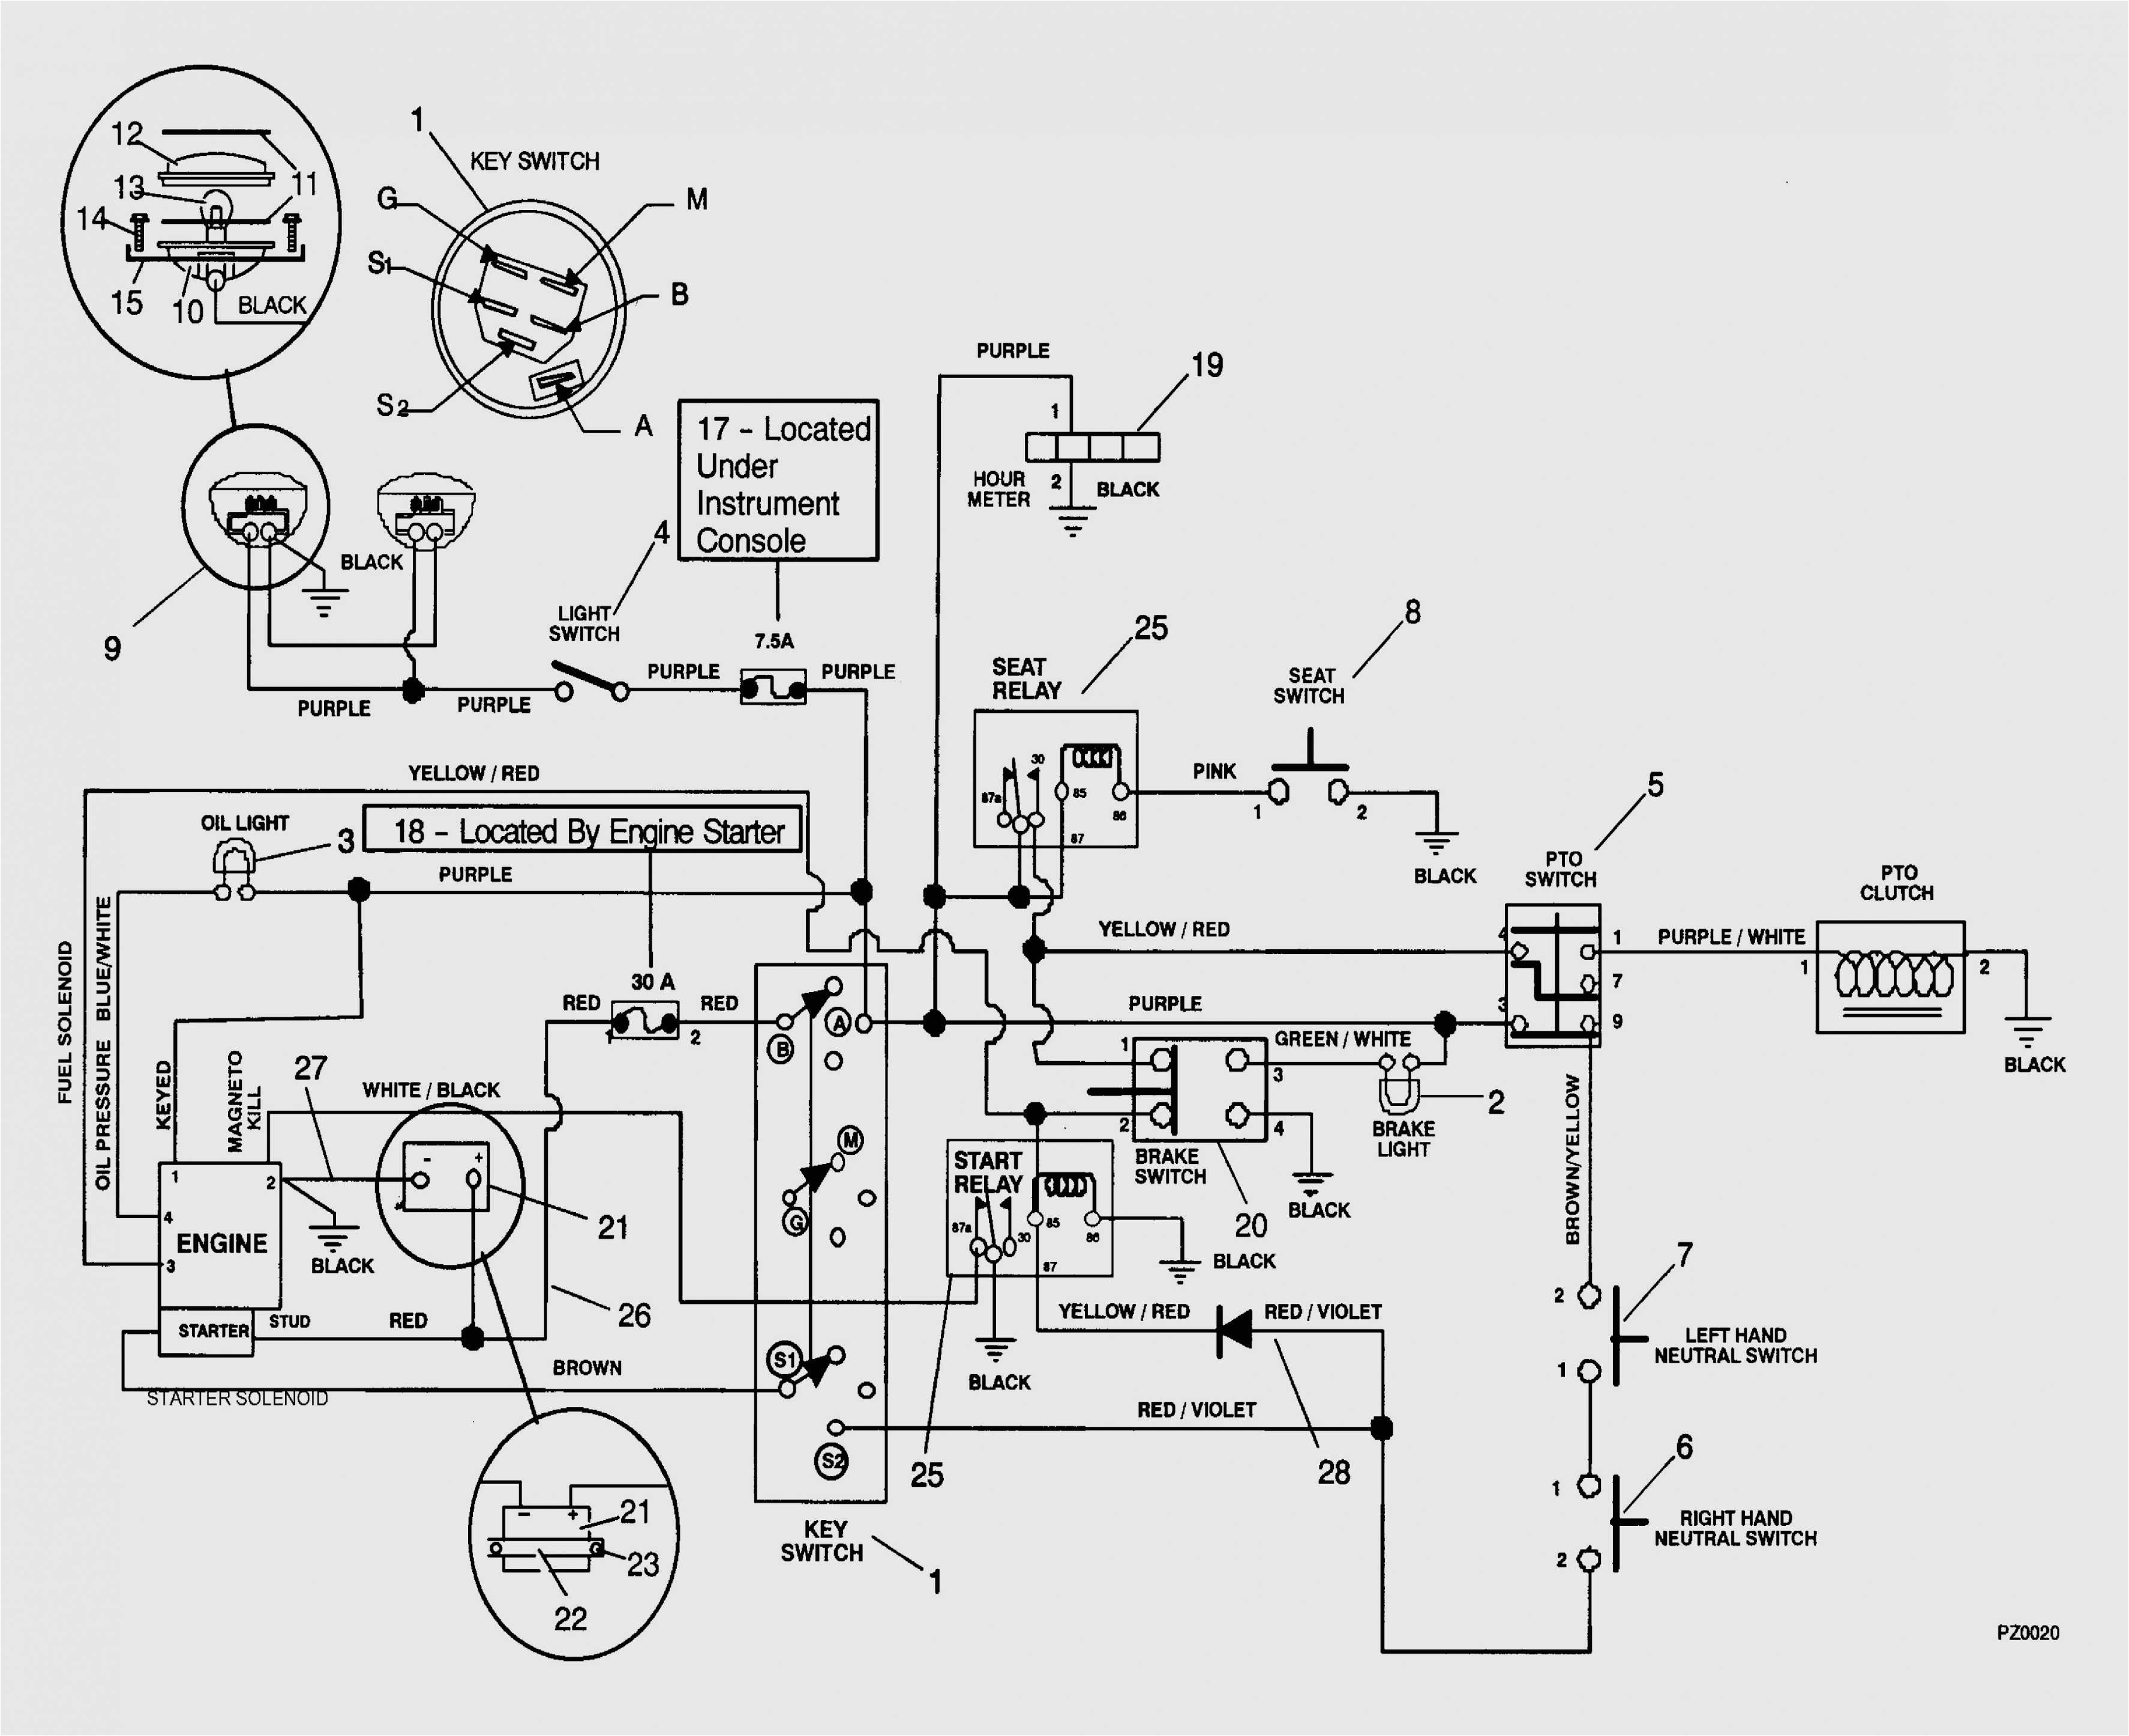 16 Hp Kohler Engine Wiring Diagram Kohler Engine 6 4 Cz Electrical Diagram Wiring Diagram Technic